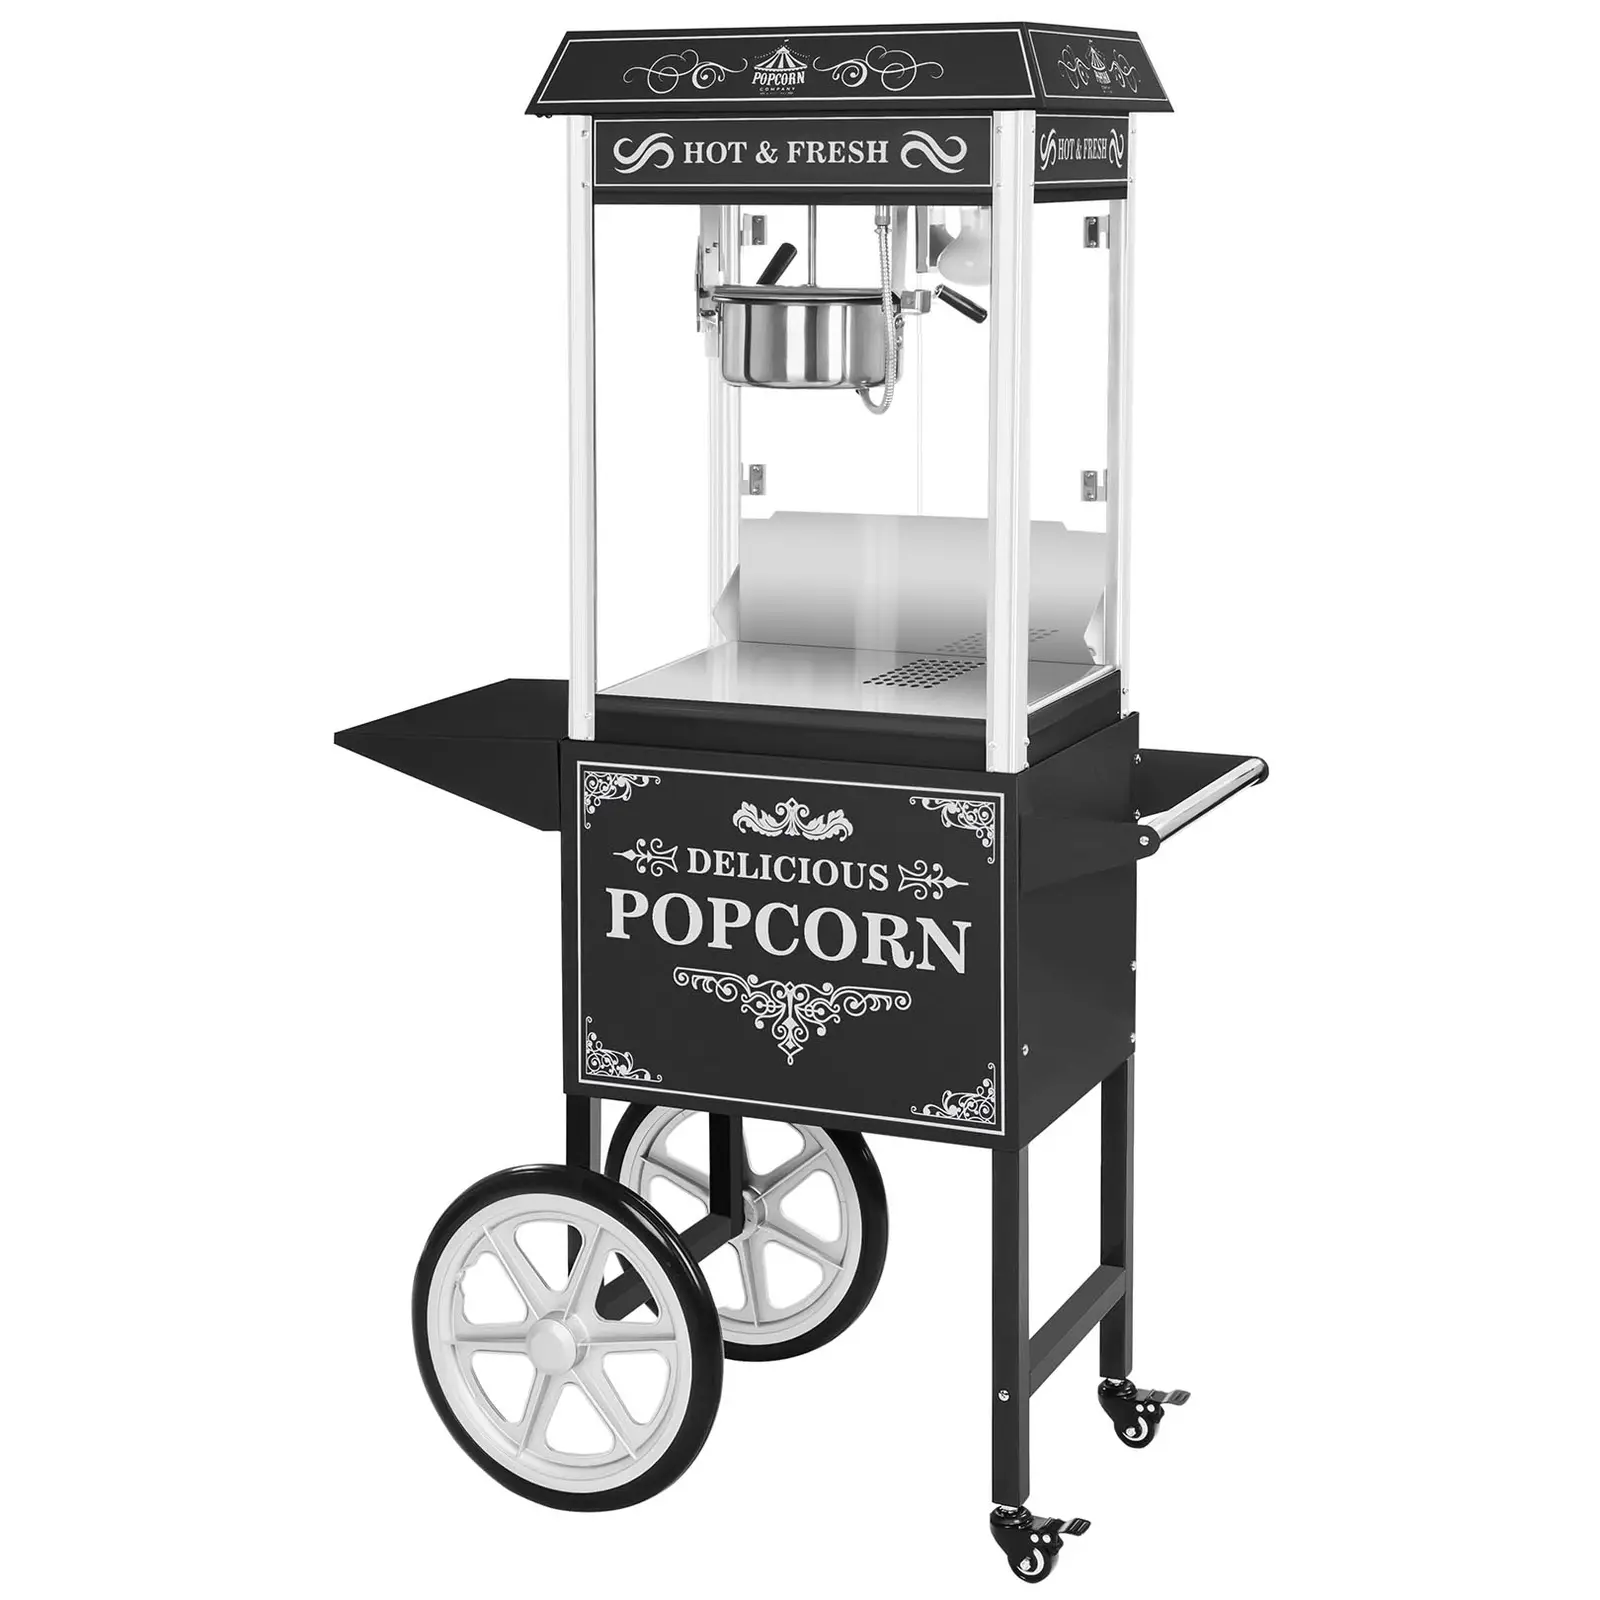 Popcornmaskin med vogn - Retro design - sort